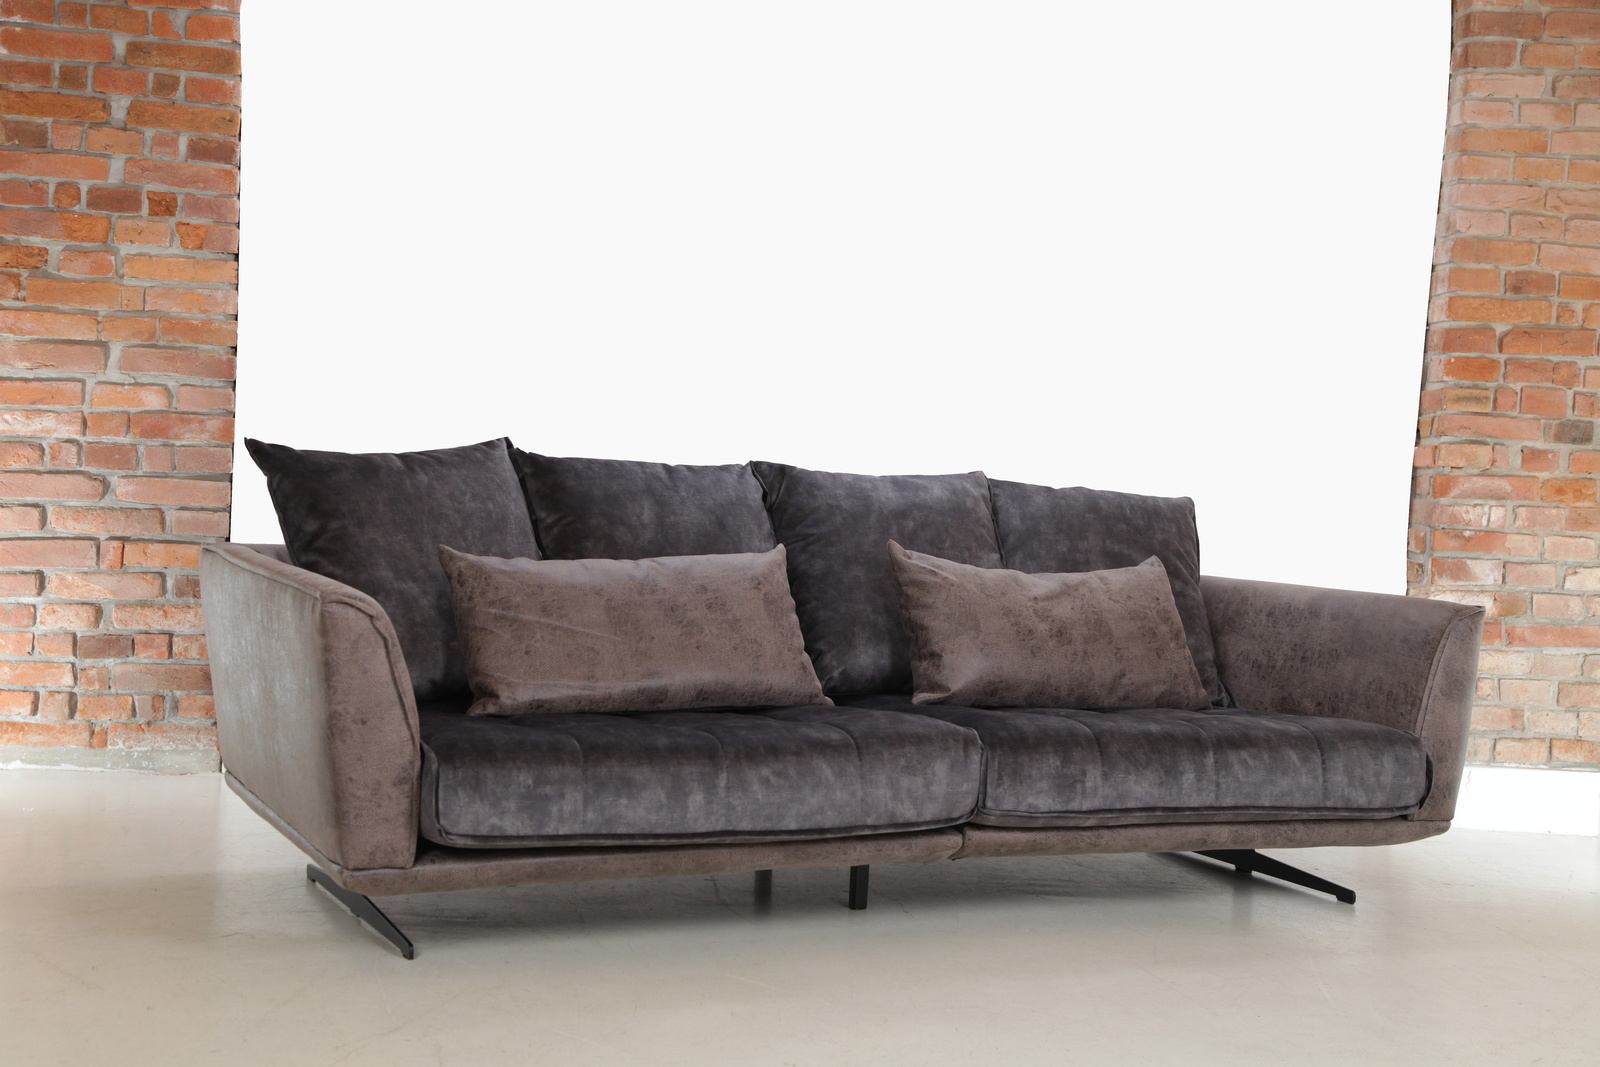 G911 mexiko sofa mega pohovka pohodlna loft gutmann factory   img 3641